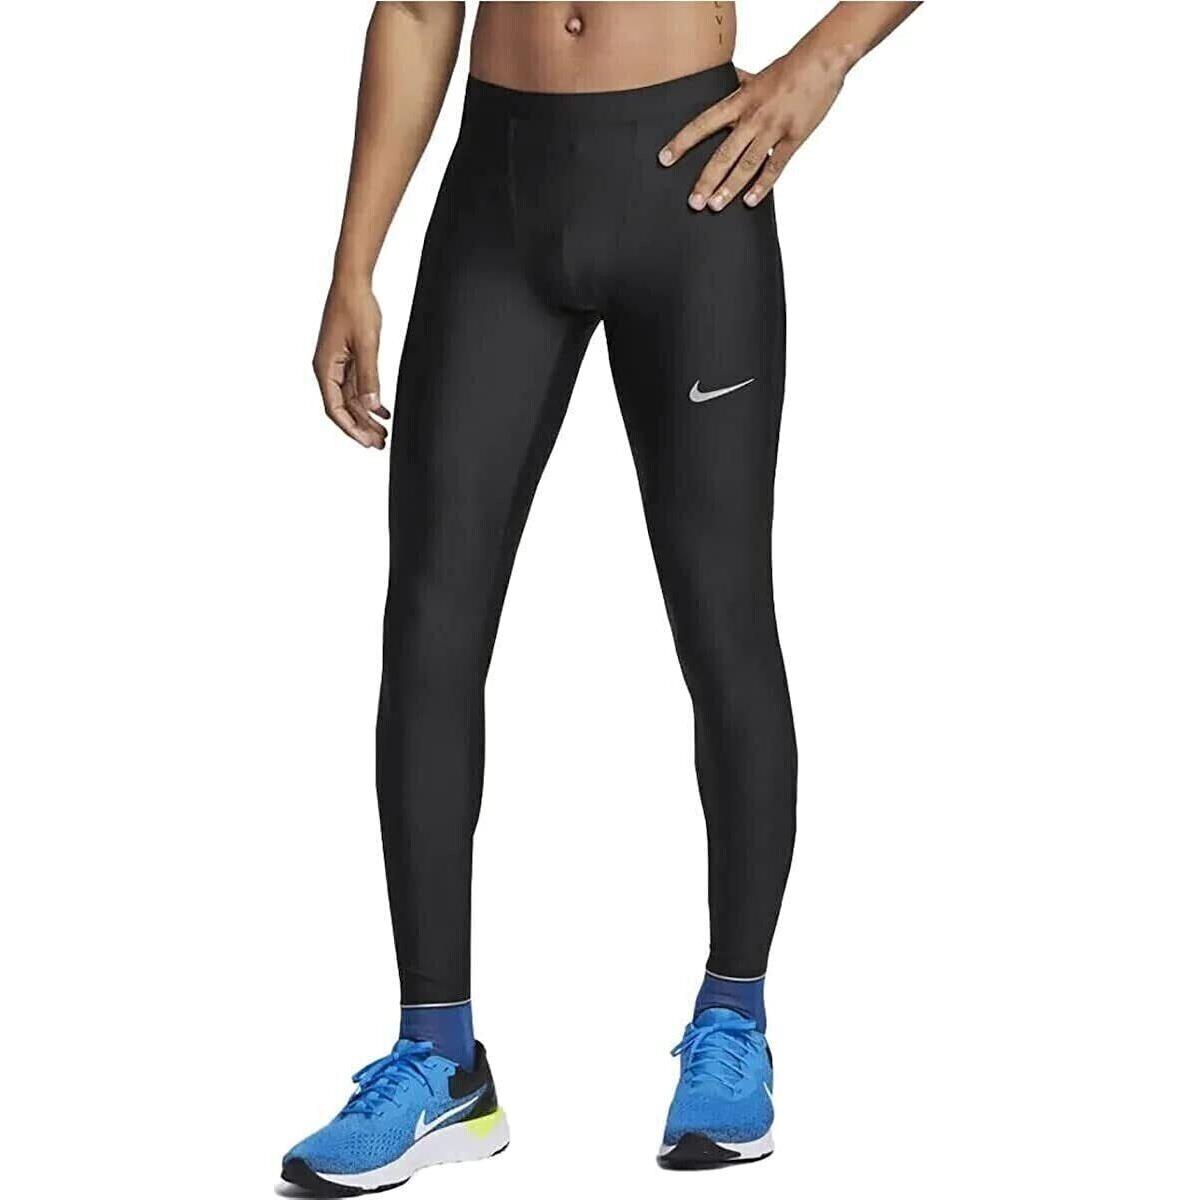 Nike Mobility Power Running Tights Pants Black DB4103-010 Men S Size M